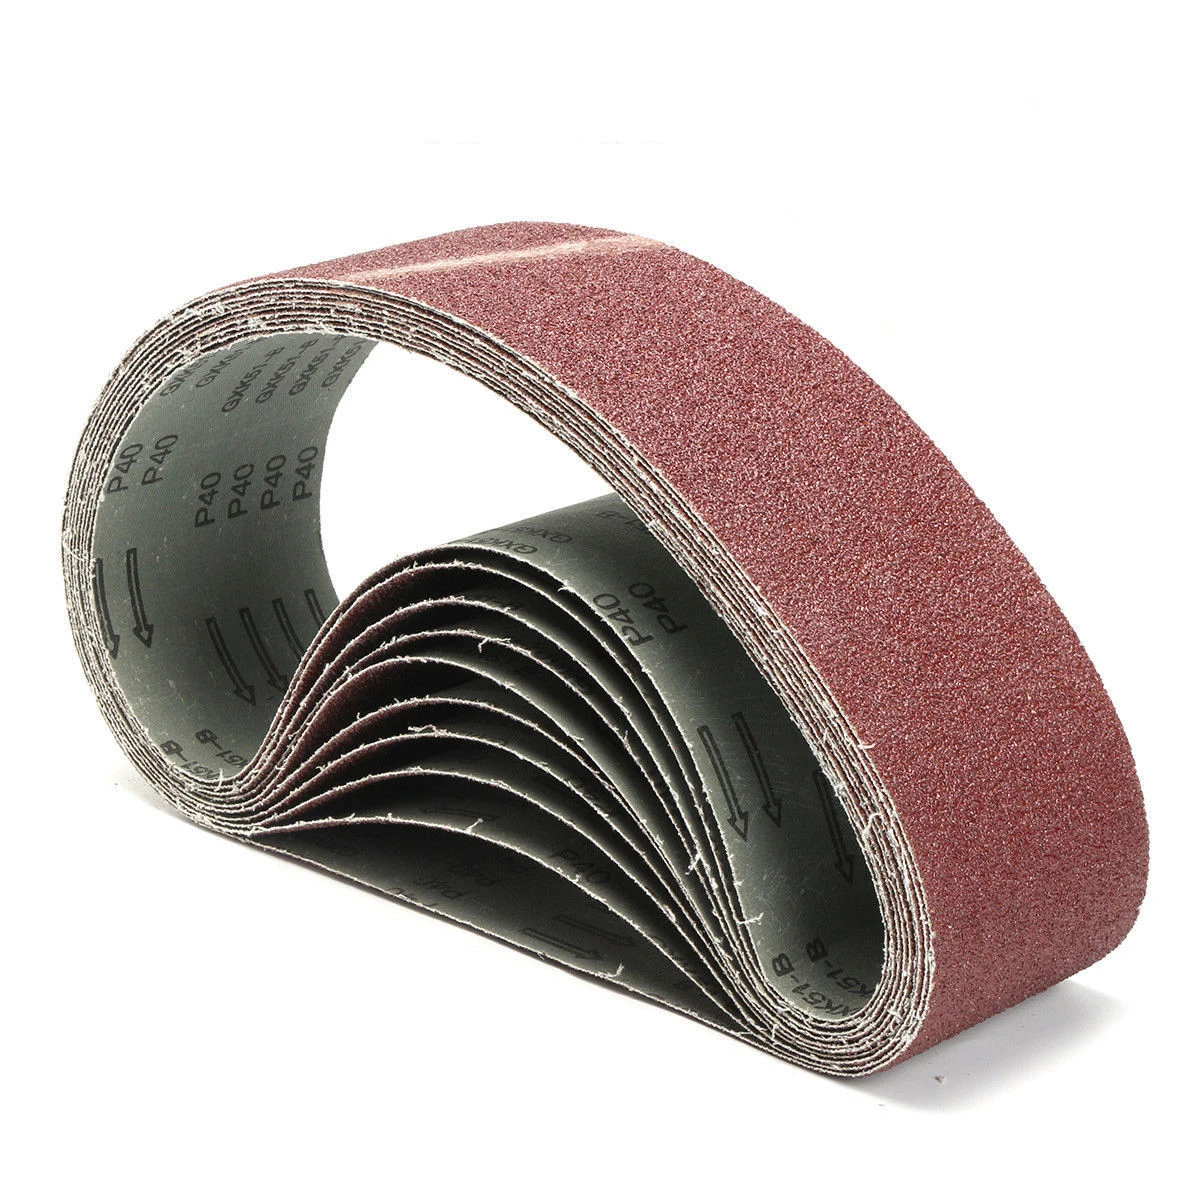 Pexcraft manufacture abrasive endless sanding belt for metal